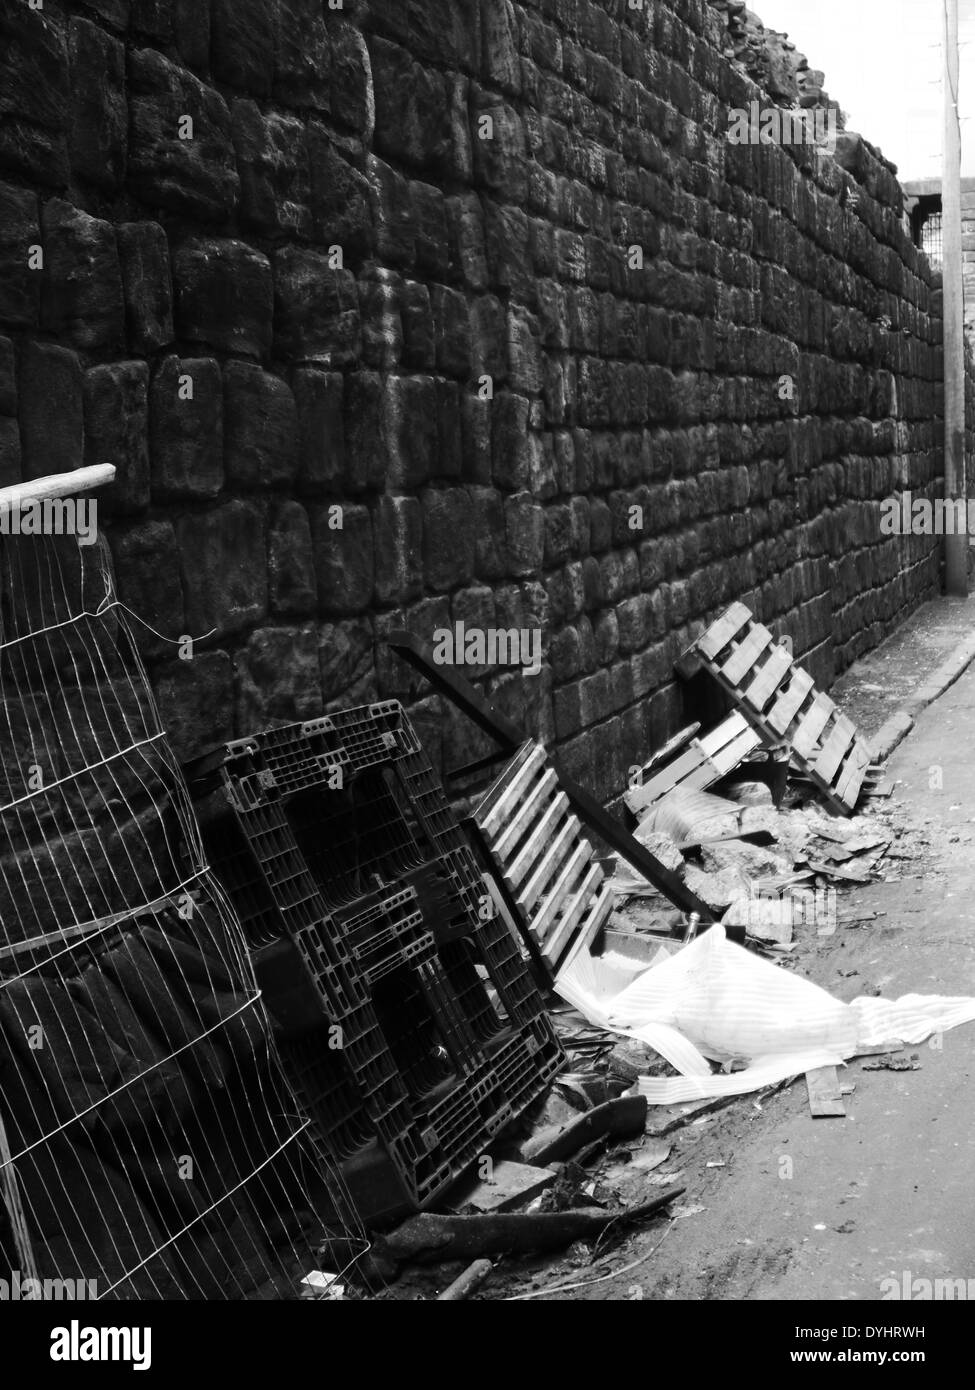 Monochrome image - Urban street scene showing refuse / debris next to historic City wall, Newcastle upon Tyne, England, UK Stock Photo